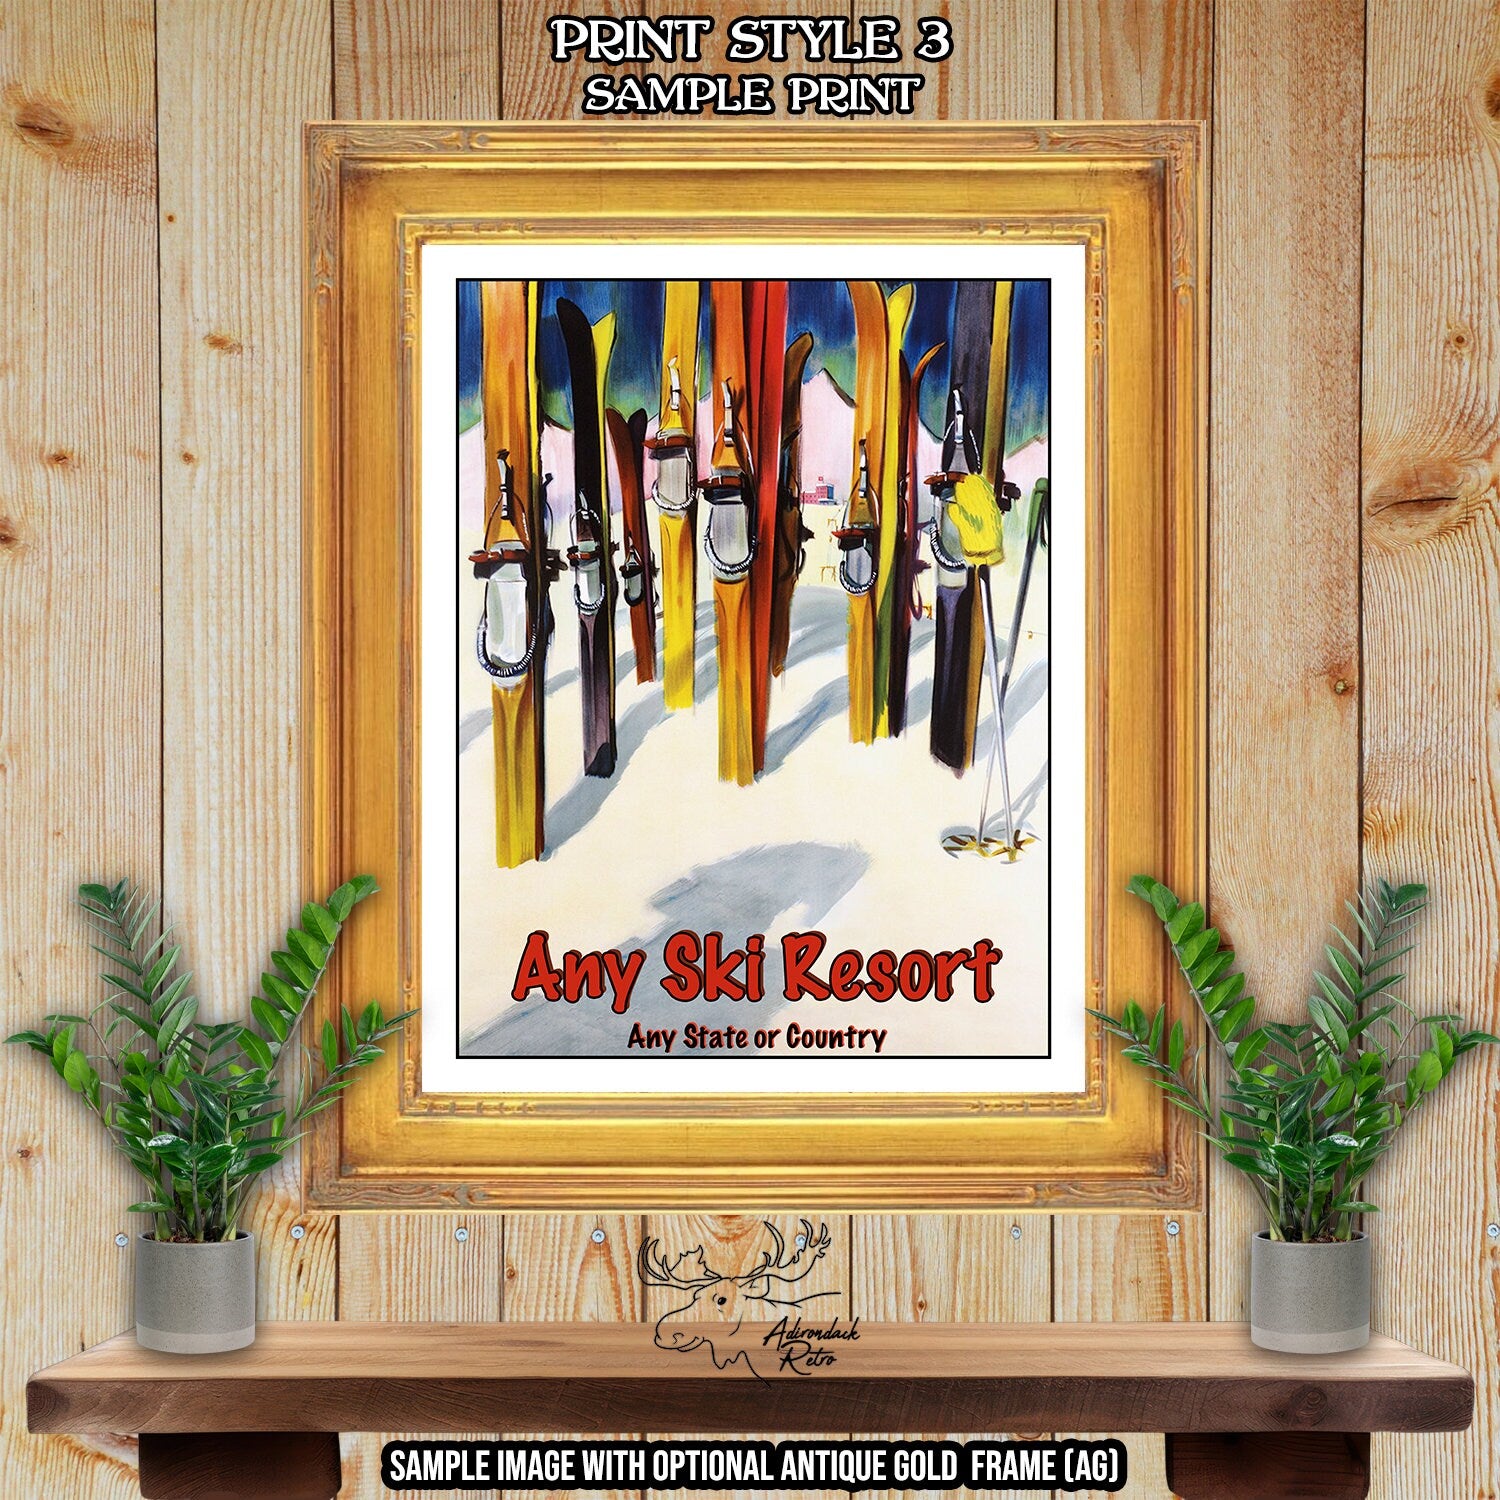 Zweisimmen Ski Resort Print - Retro Switzerland Ski Resort Poster